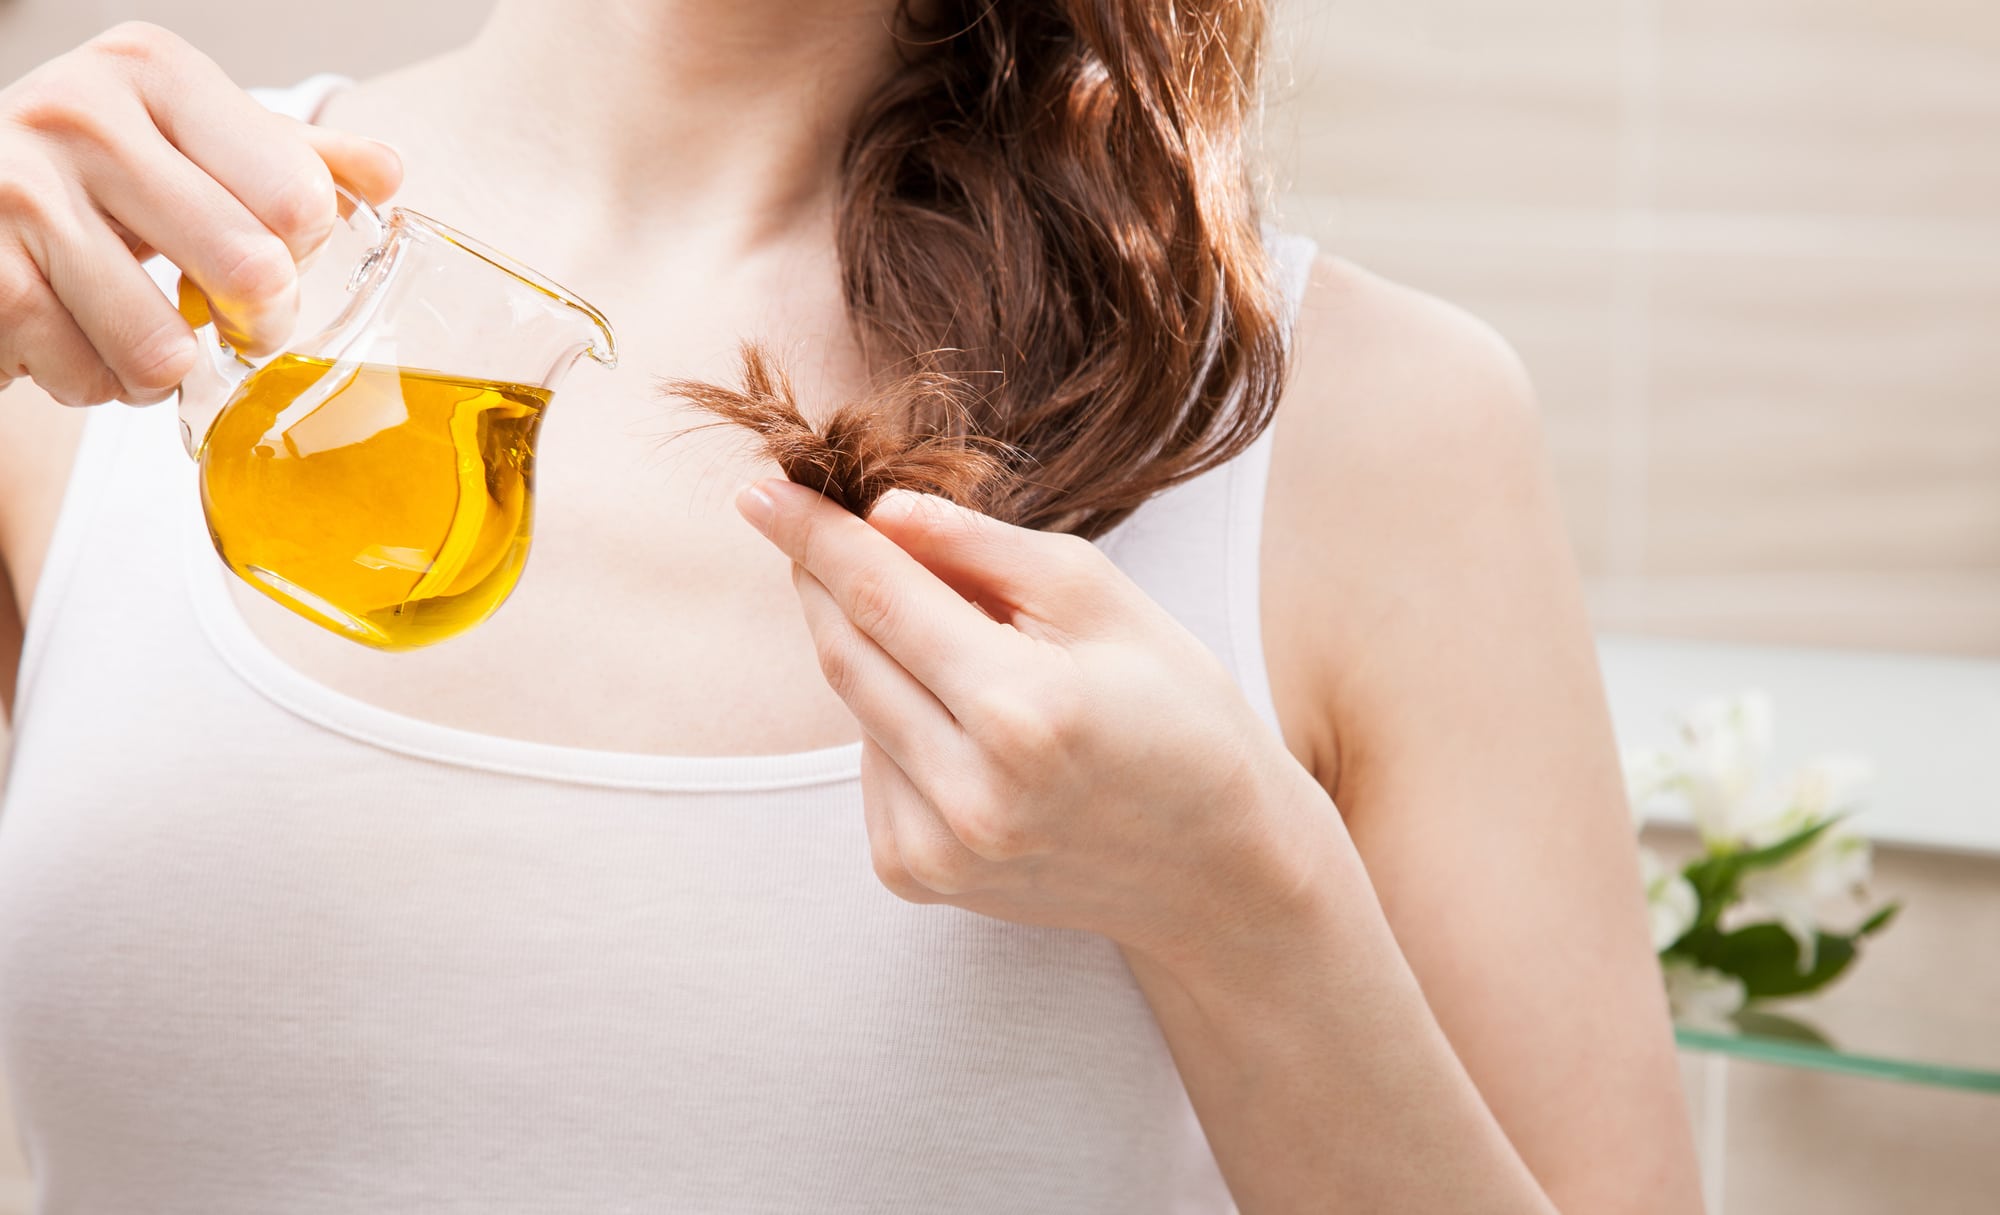 10 Hair Care Tips to Help Maintain Salon Quality Looks